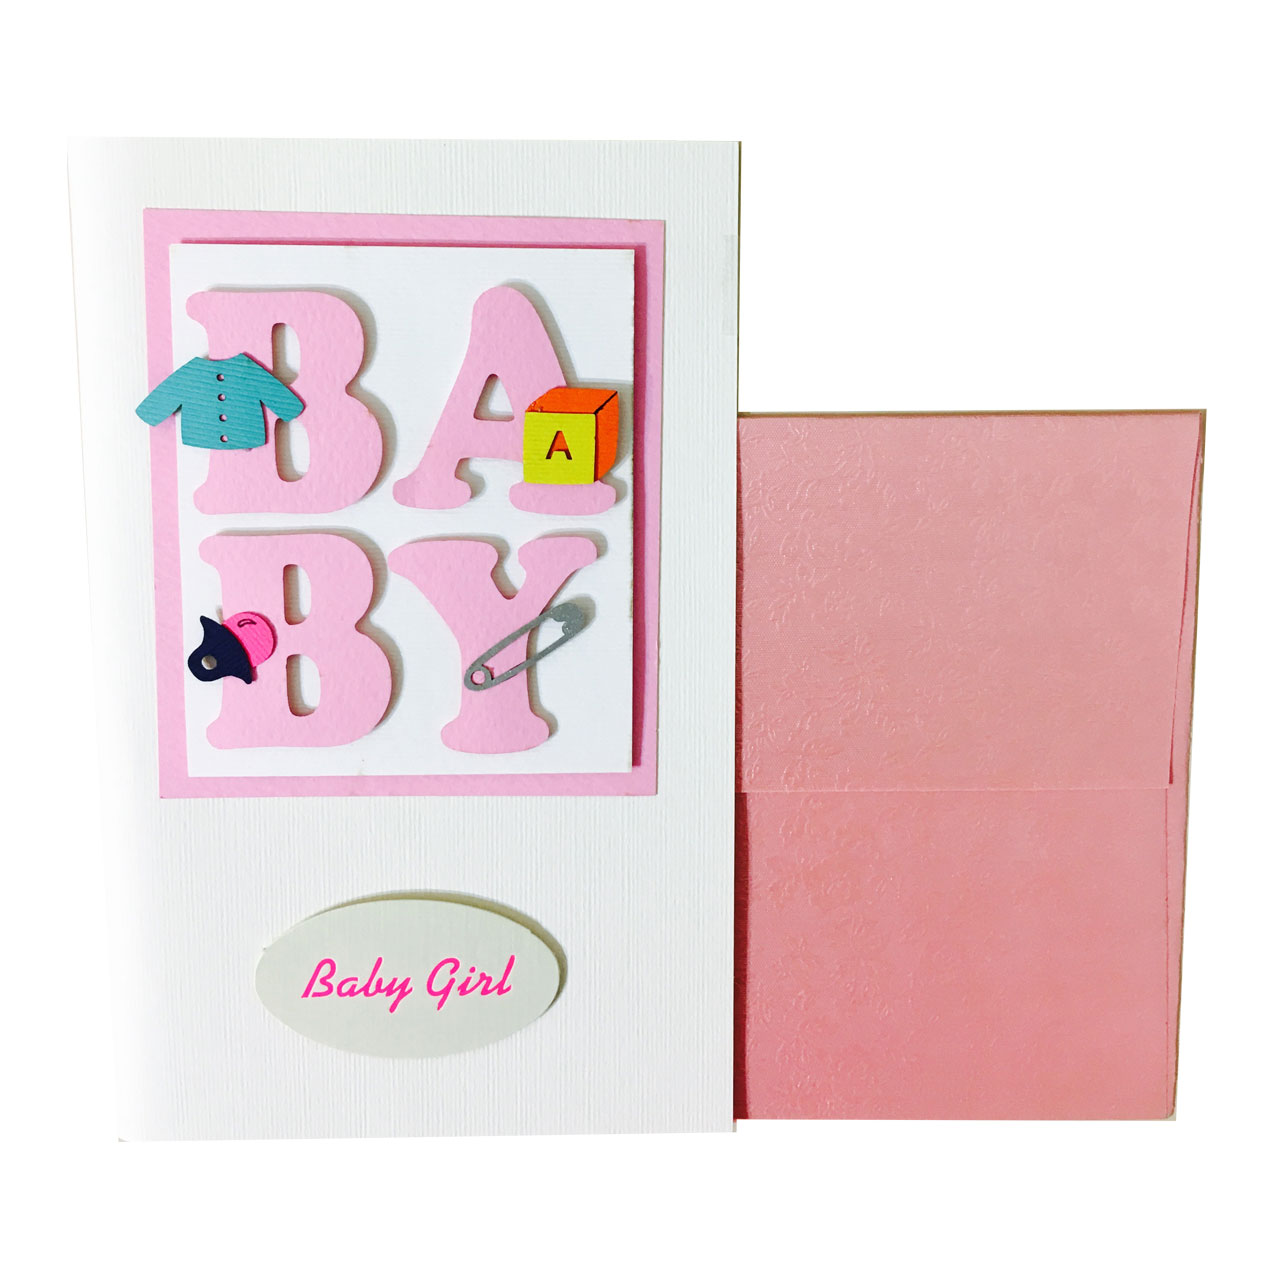 کارت پستال دست ساز مدل Baby Girl